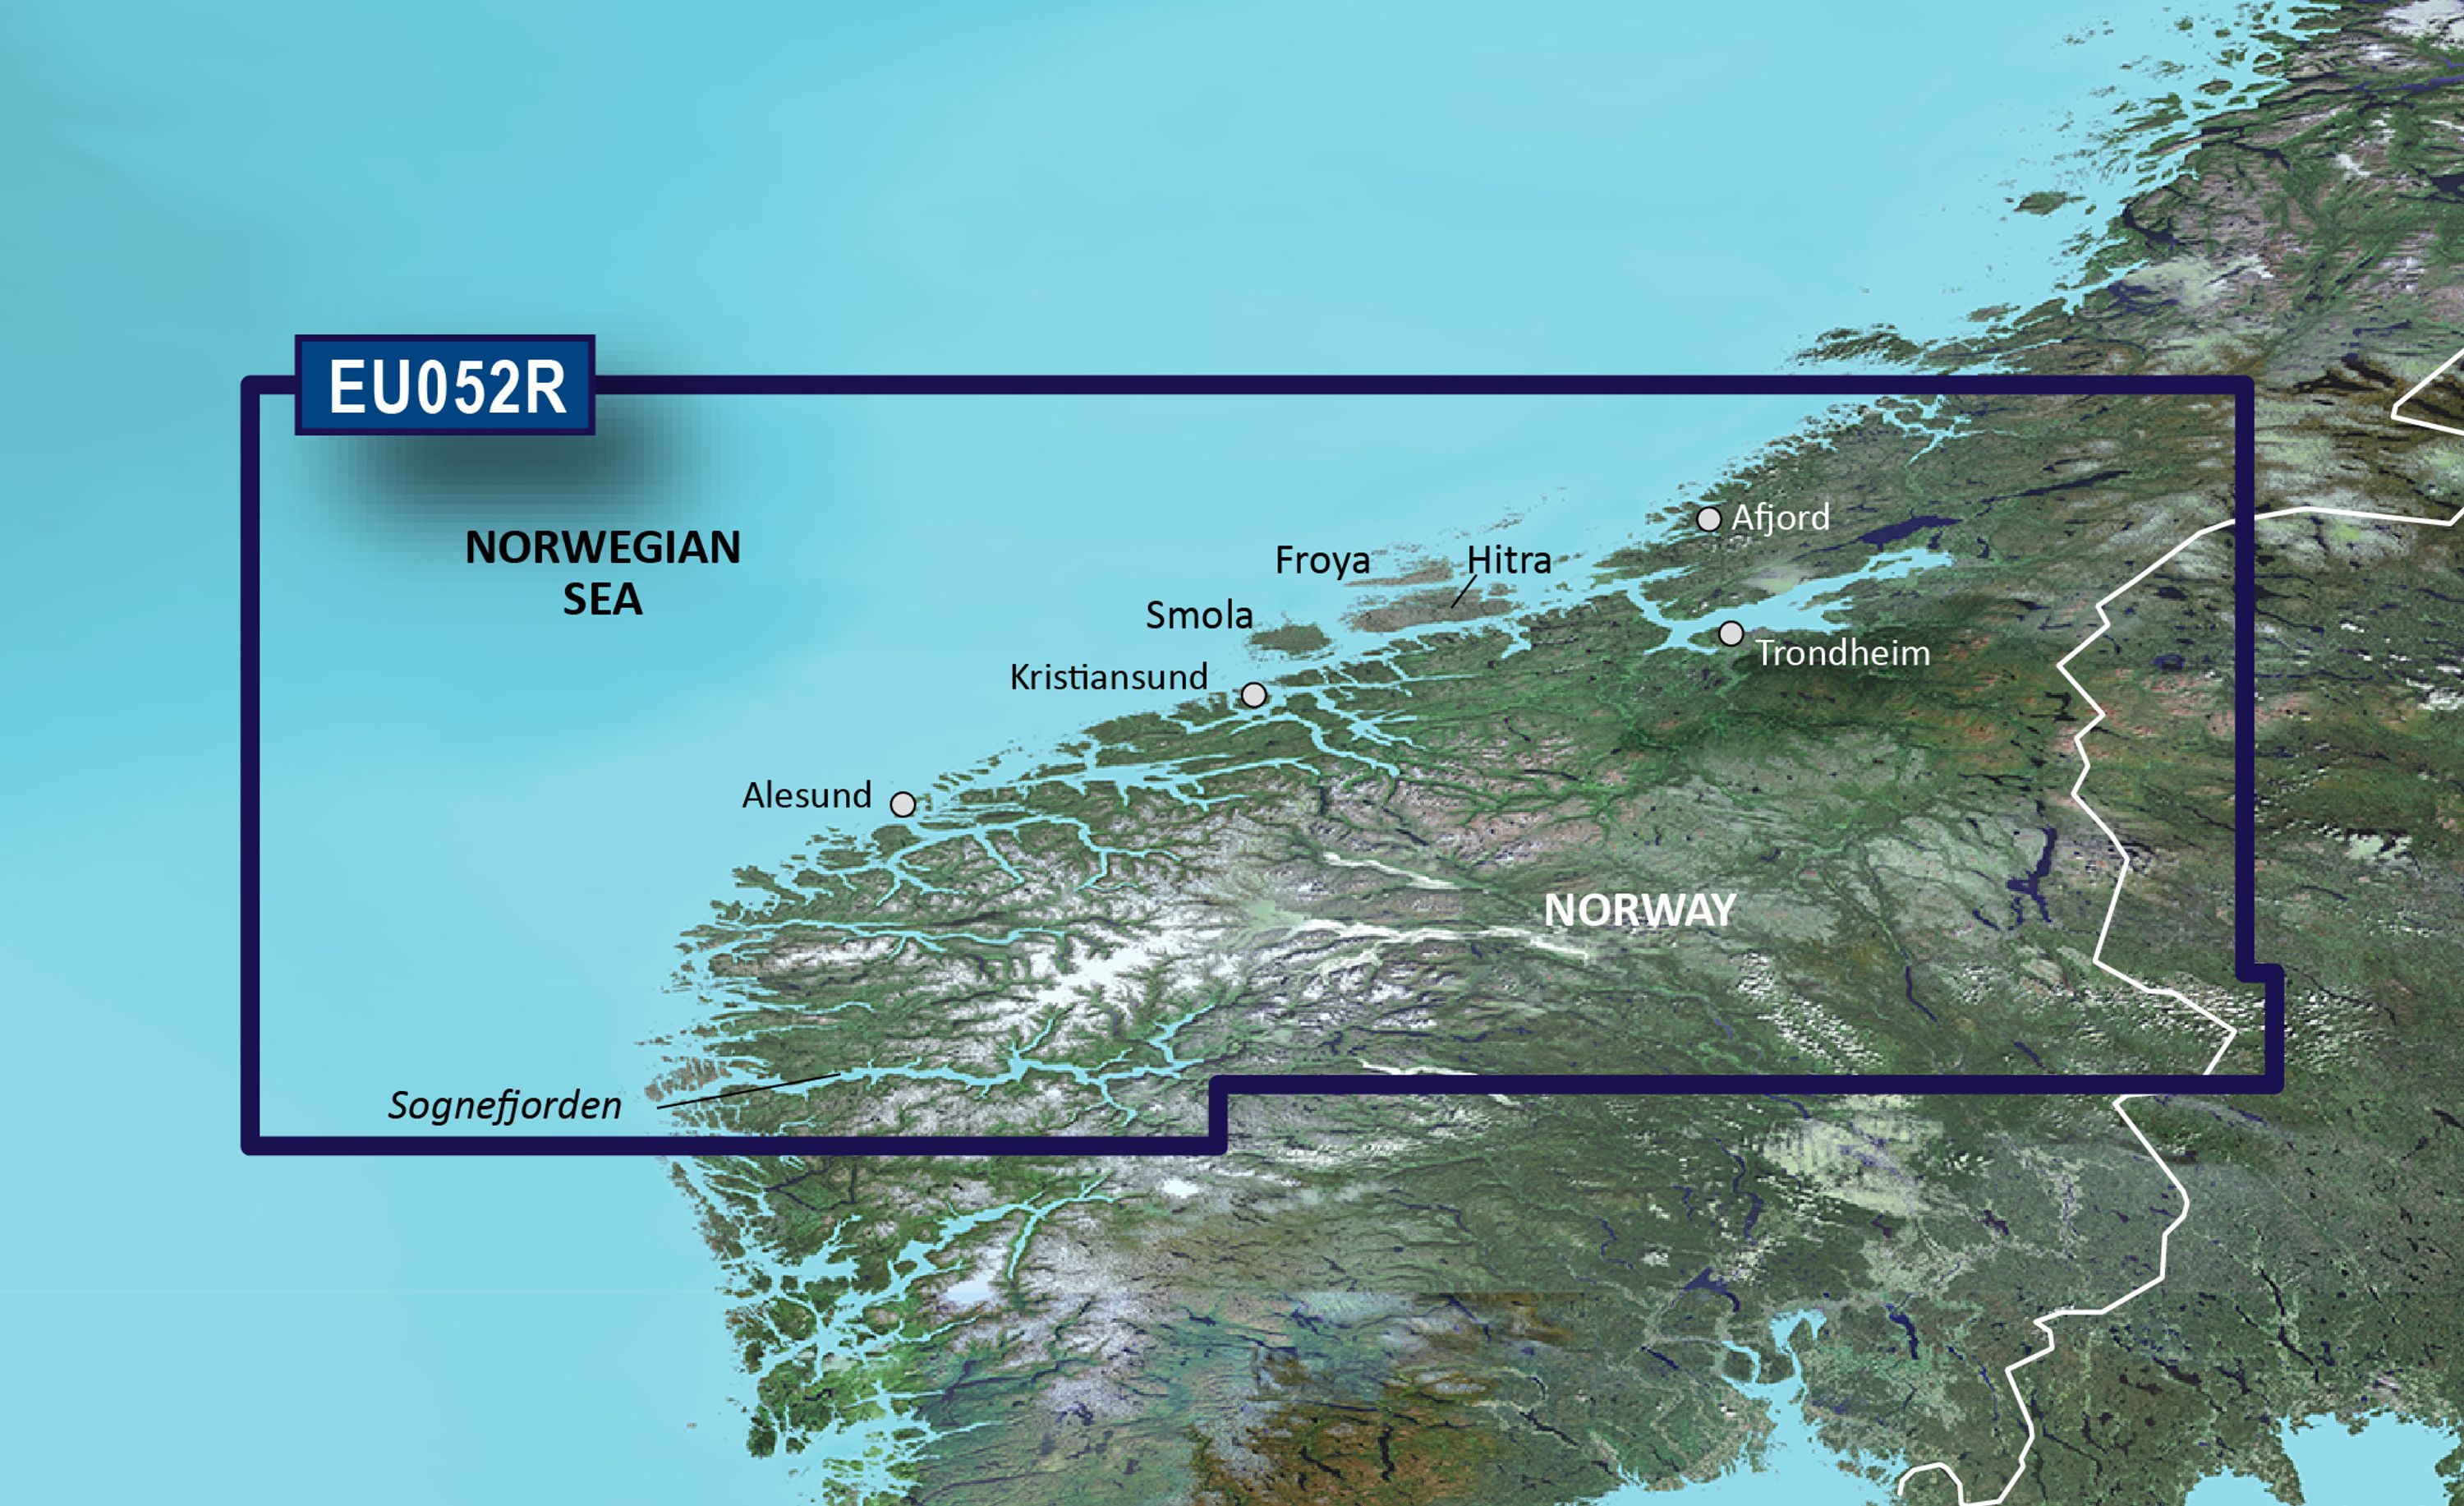 Osta Bluechart g3 vision kartat, veu052r sognefjorden-svefjorden netistä |  